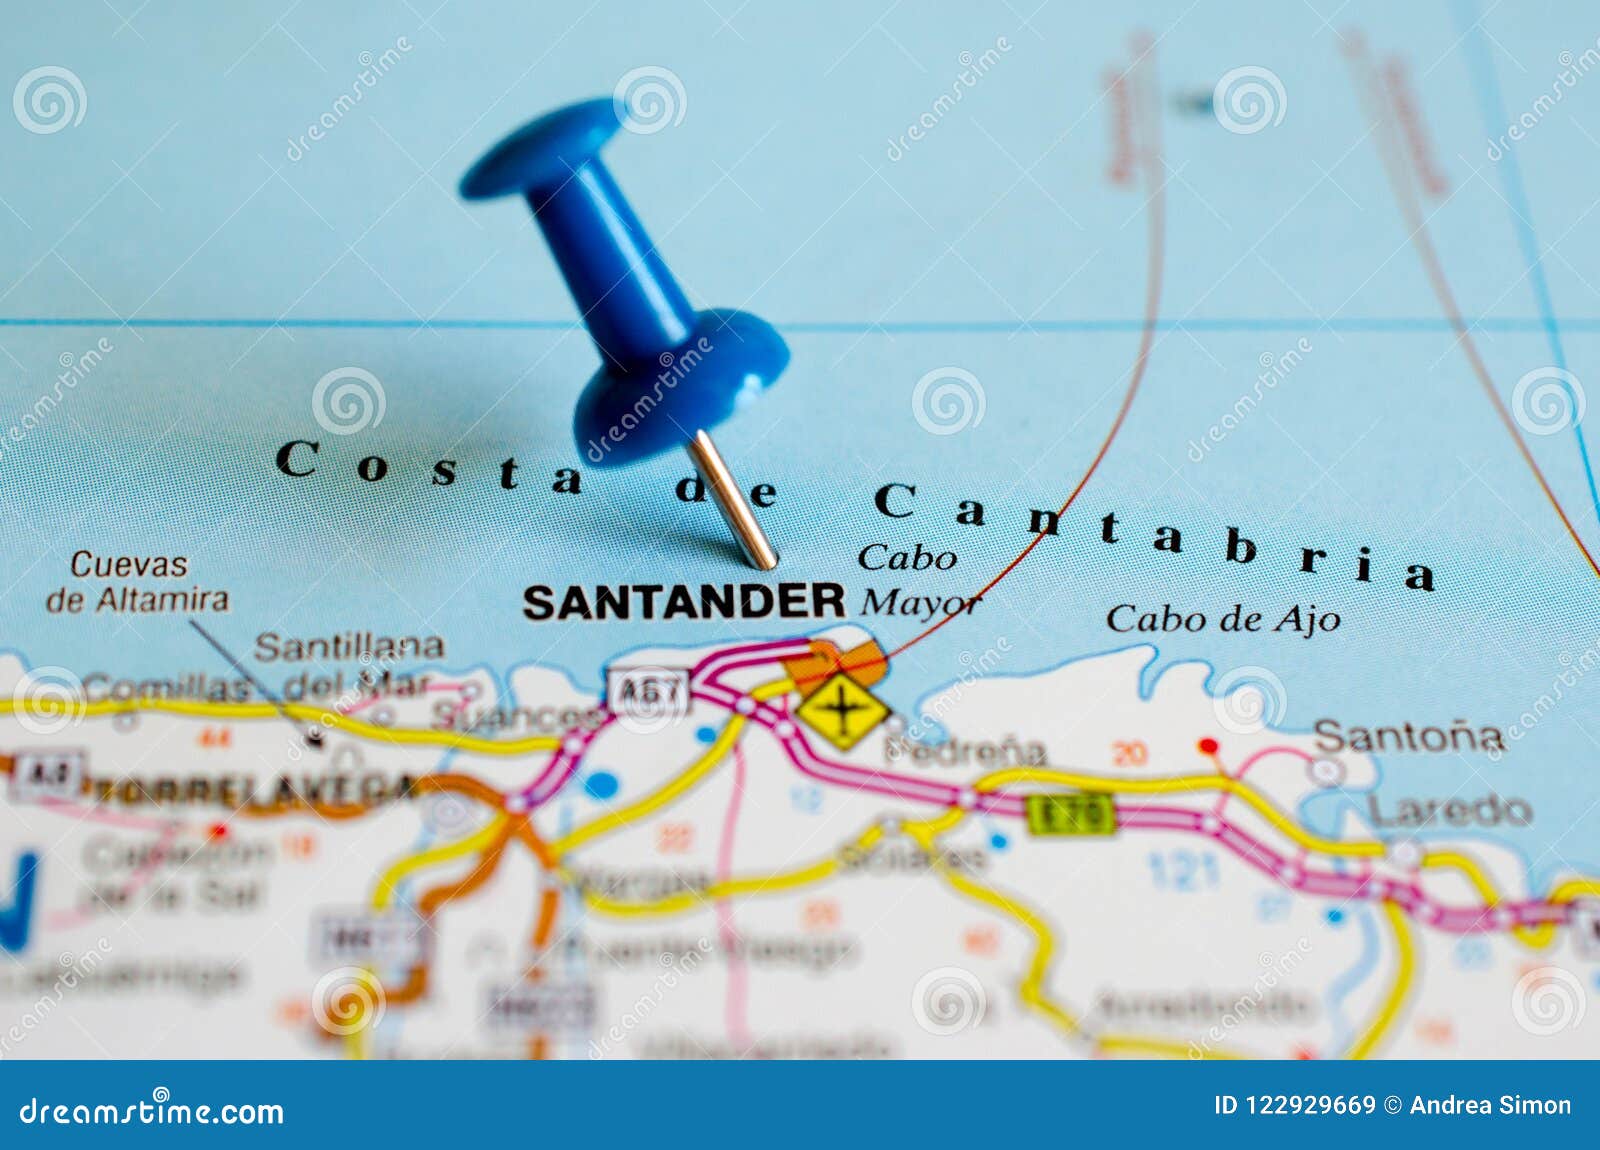 Santander, Spain on map stock image. Image of destination - 122929669